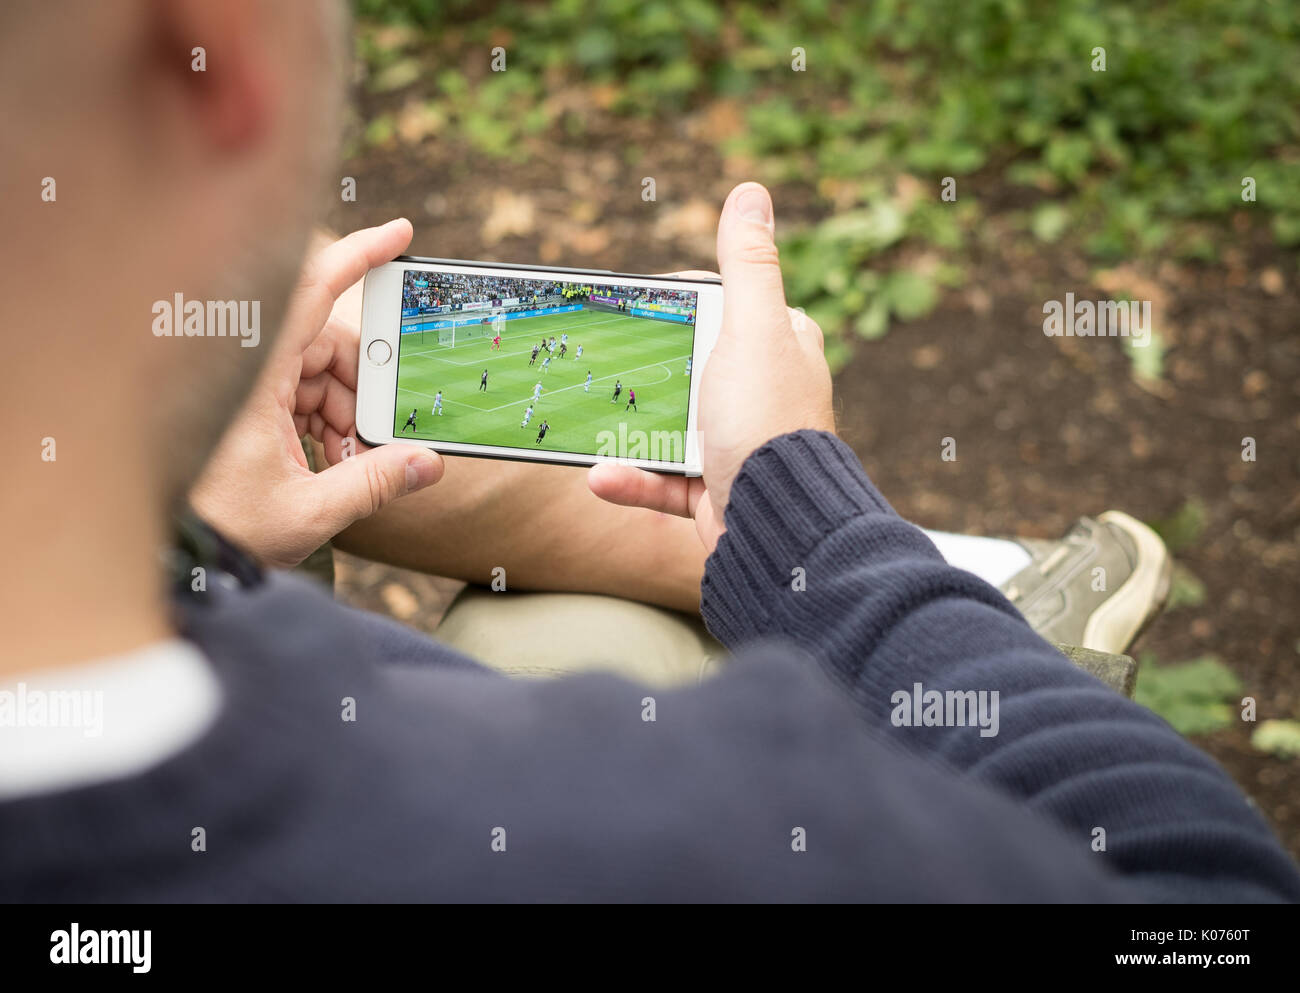 Homme qui regarde un match de football en streaming sur smartphone en zone rurale Banque D'Images